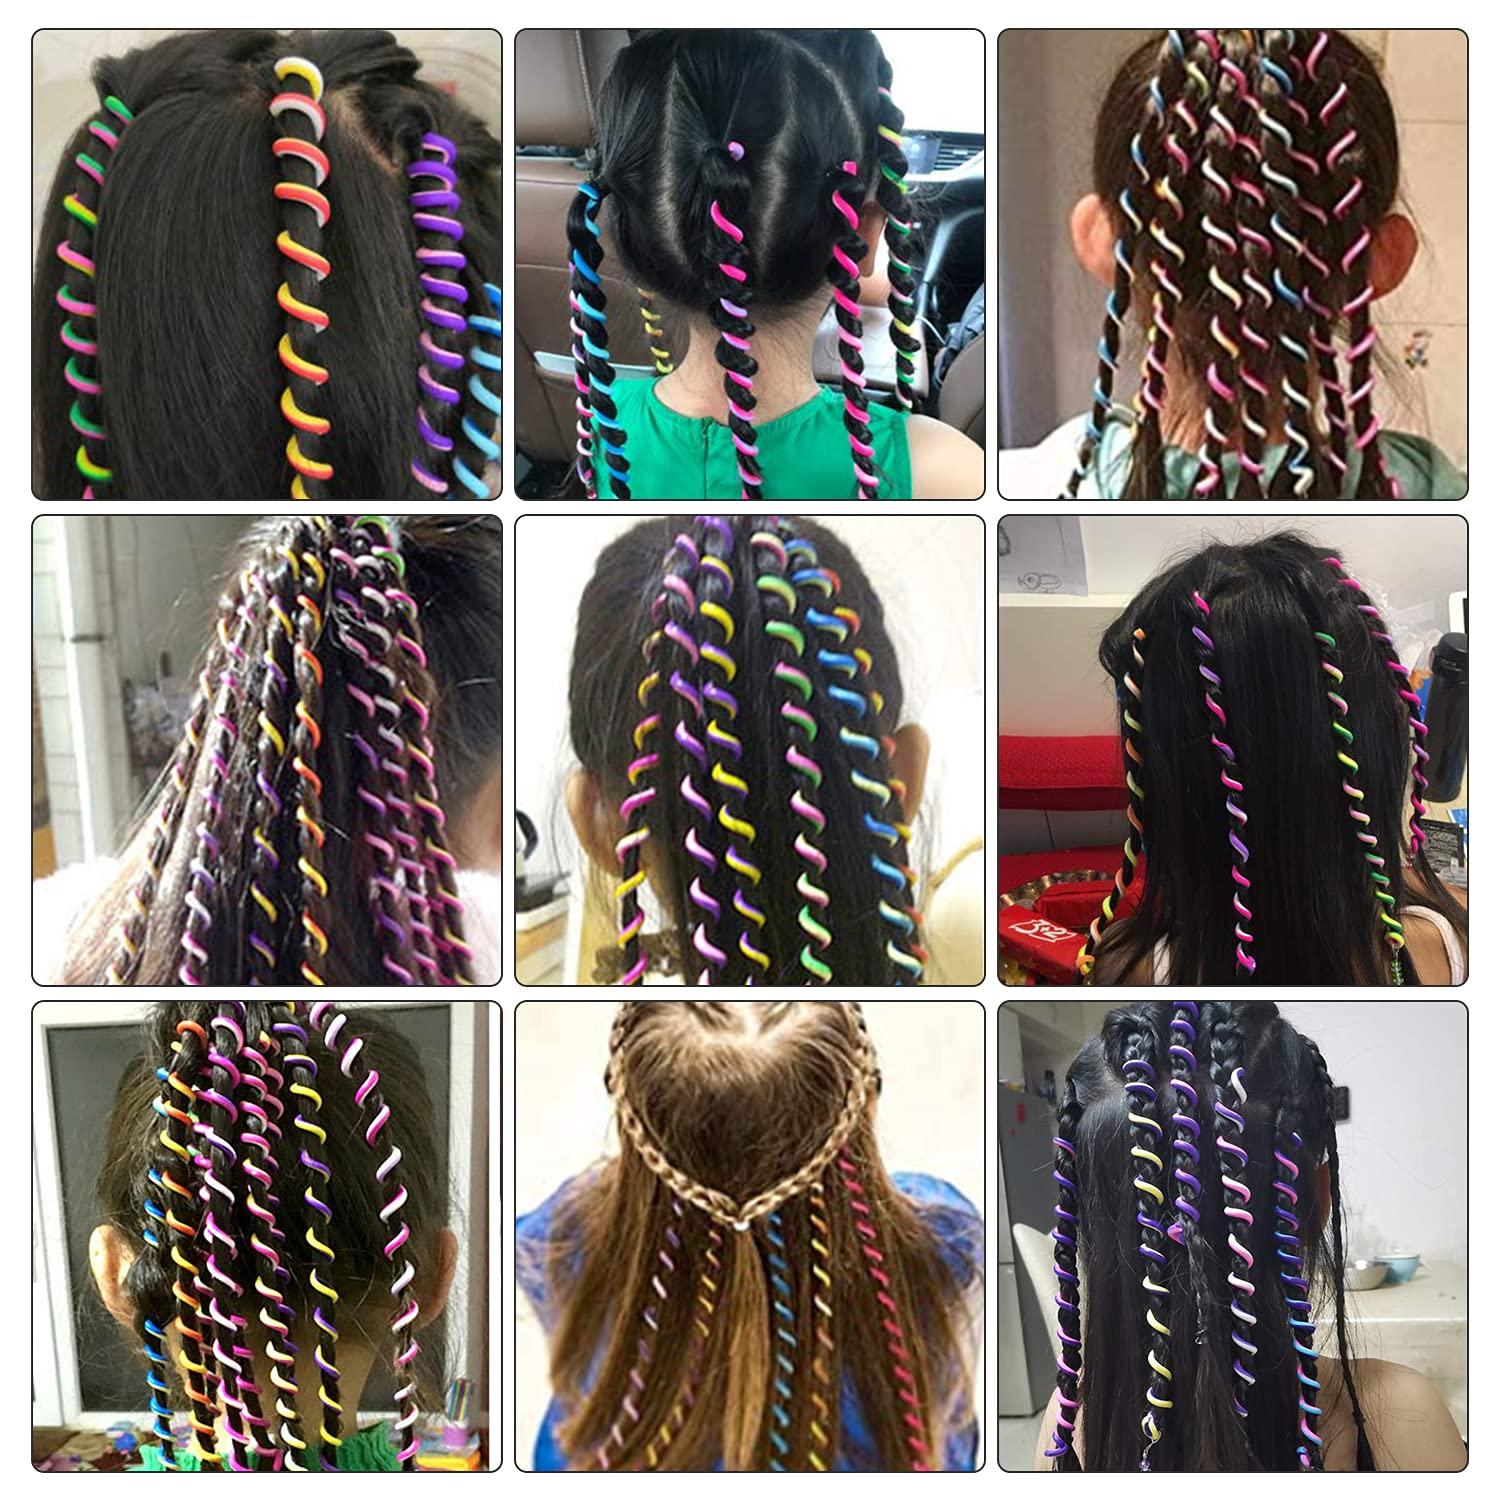 18pcs Girls Hair Styling Twister Clip, Women Hair Braider DIY Tool Accessories, Hair Beads for Braids for Girls Braided Hair Circle, Pink